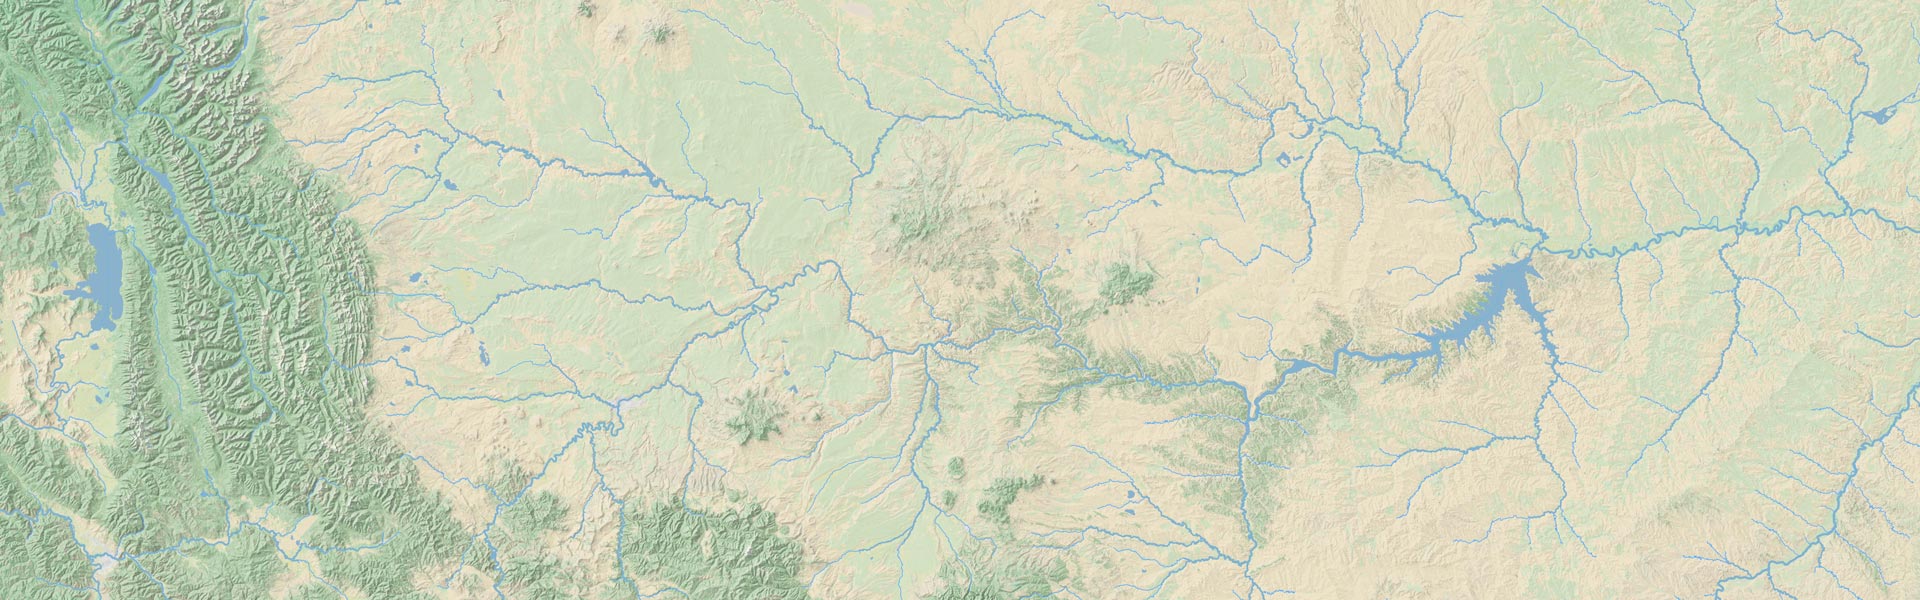 Montana topography closeup